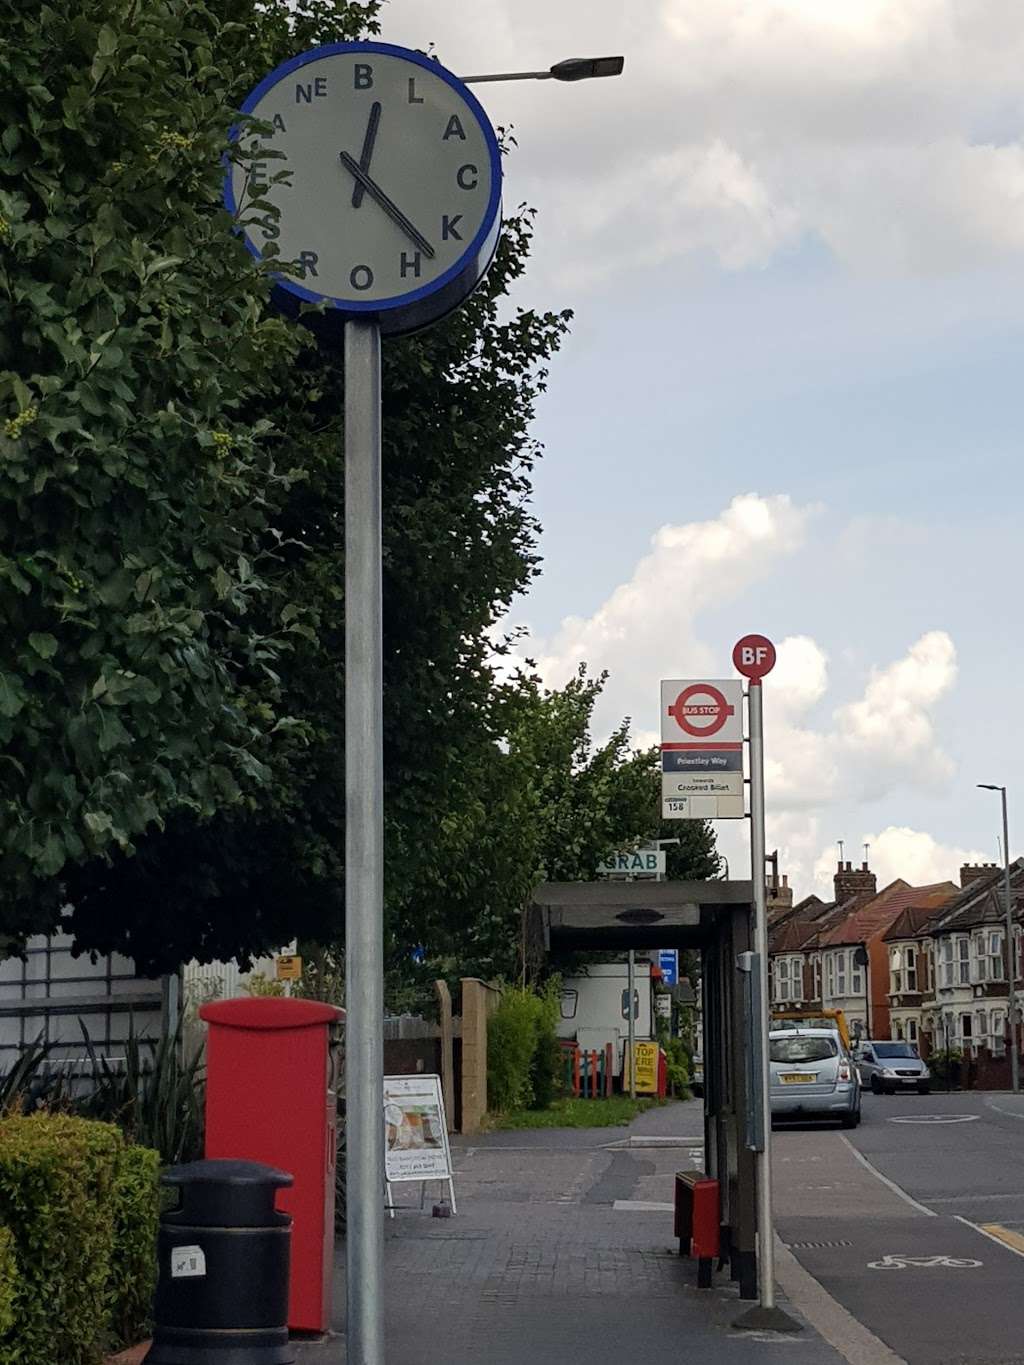 Priestley Way (Stop BF) | Photo 2 of 2 | Address: Walthamstow, London E17 6SH, UK